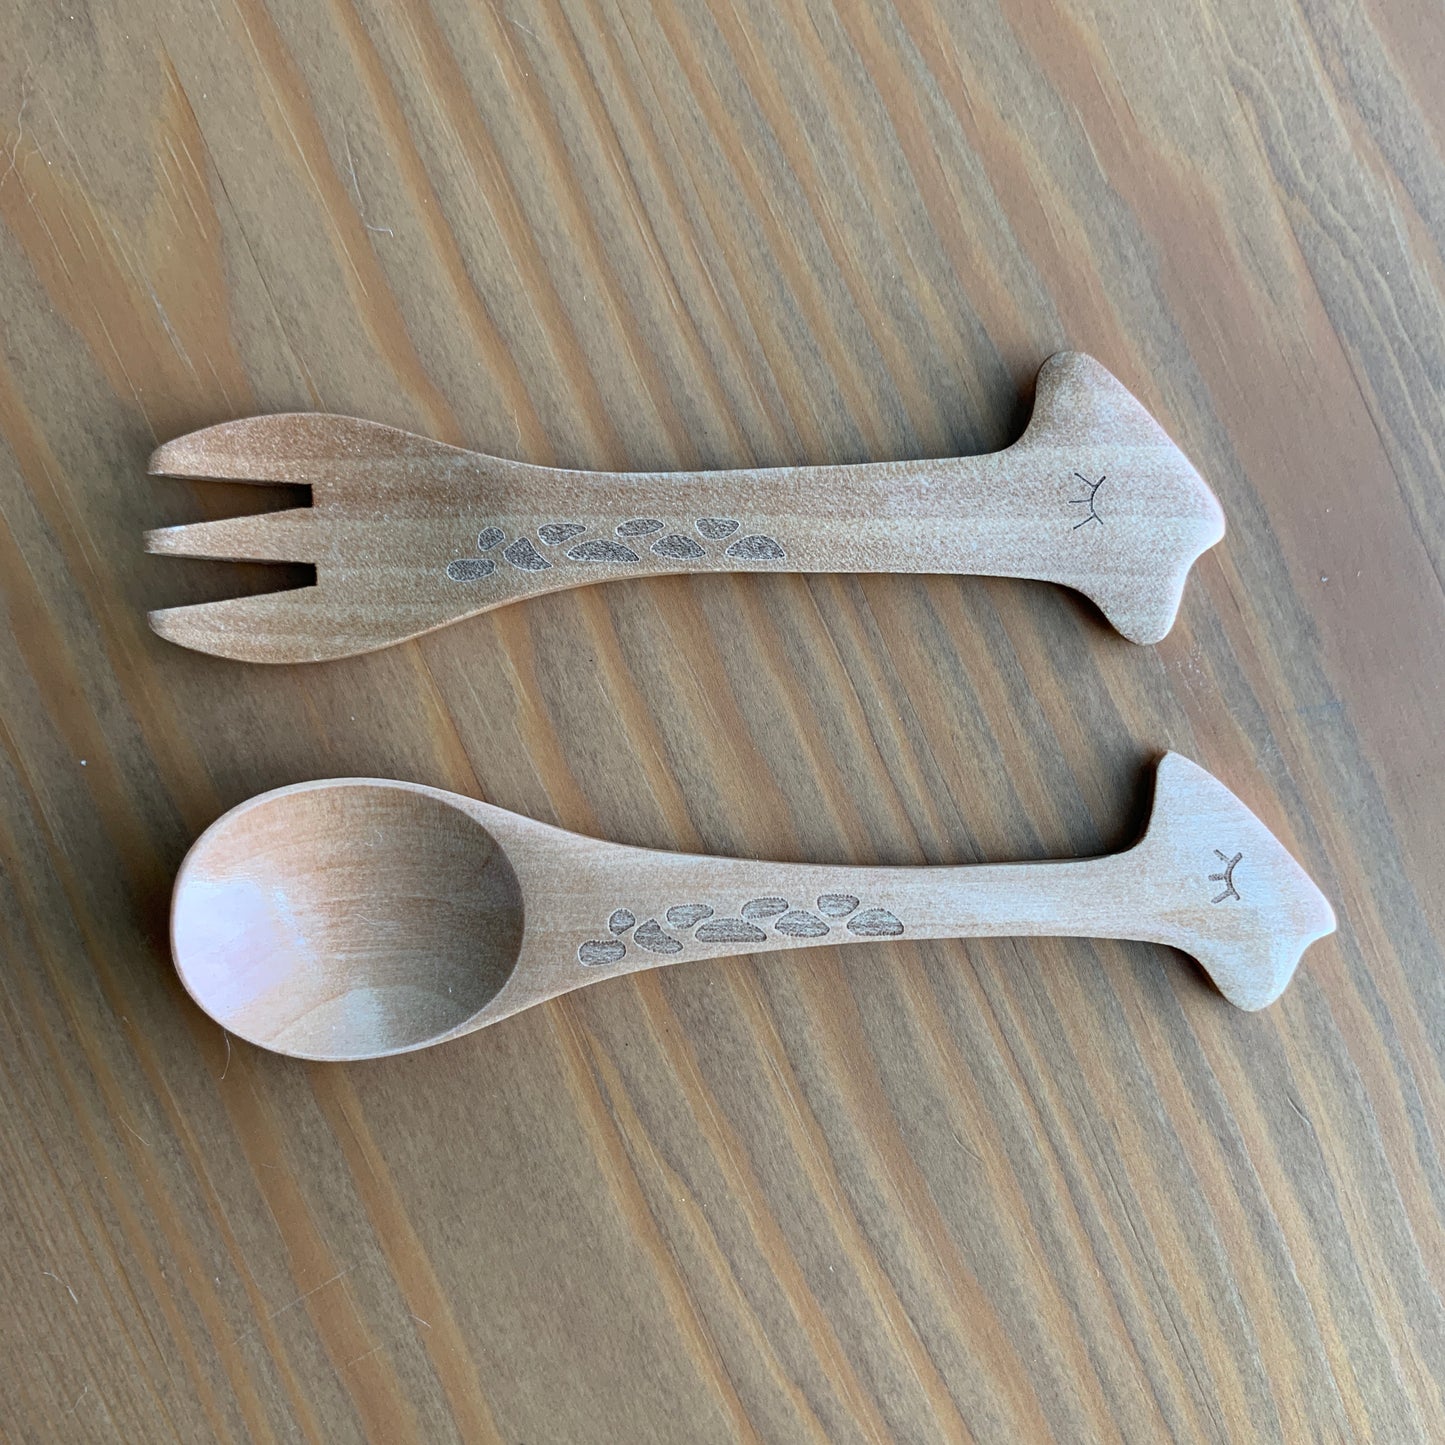 wooden reusable eco utensils (kids/travel size!)